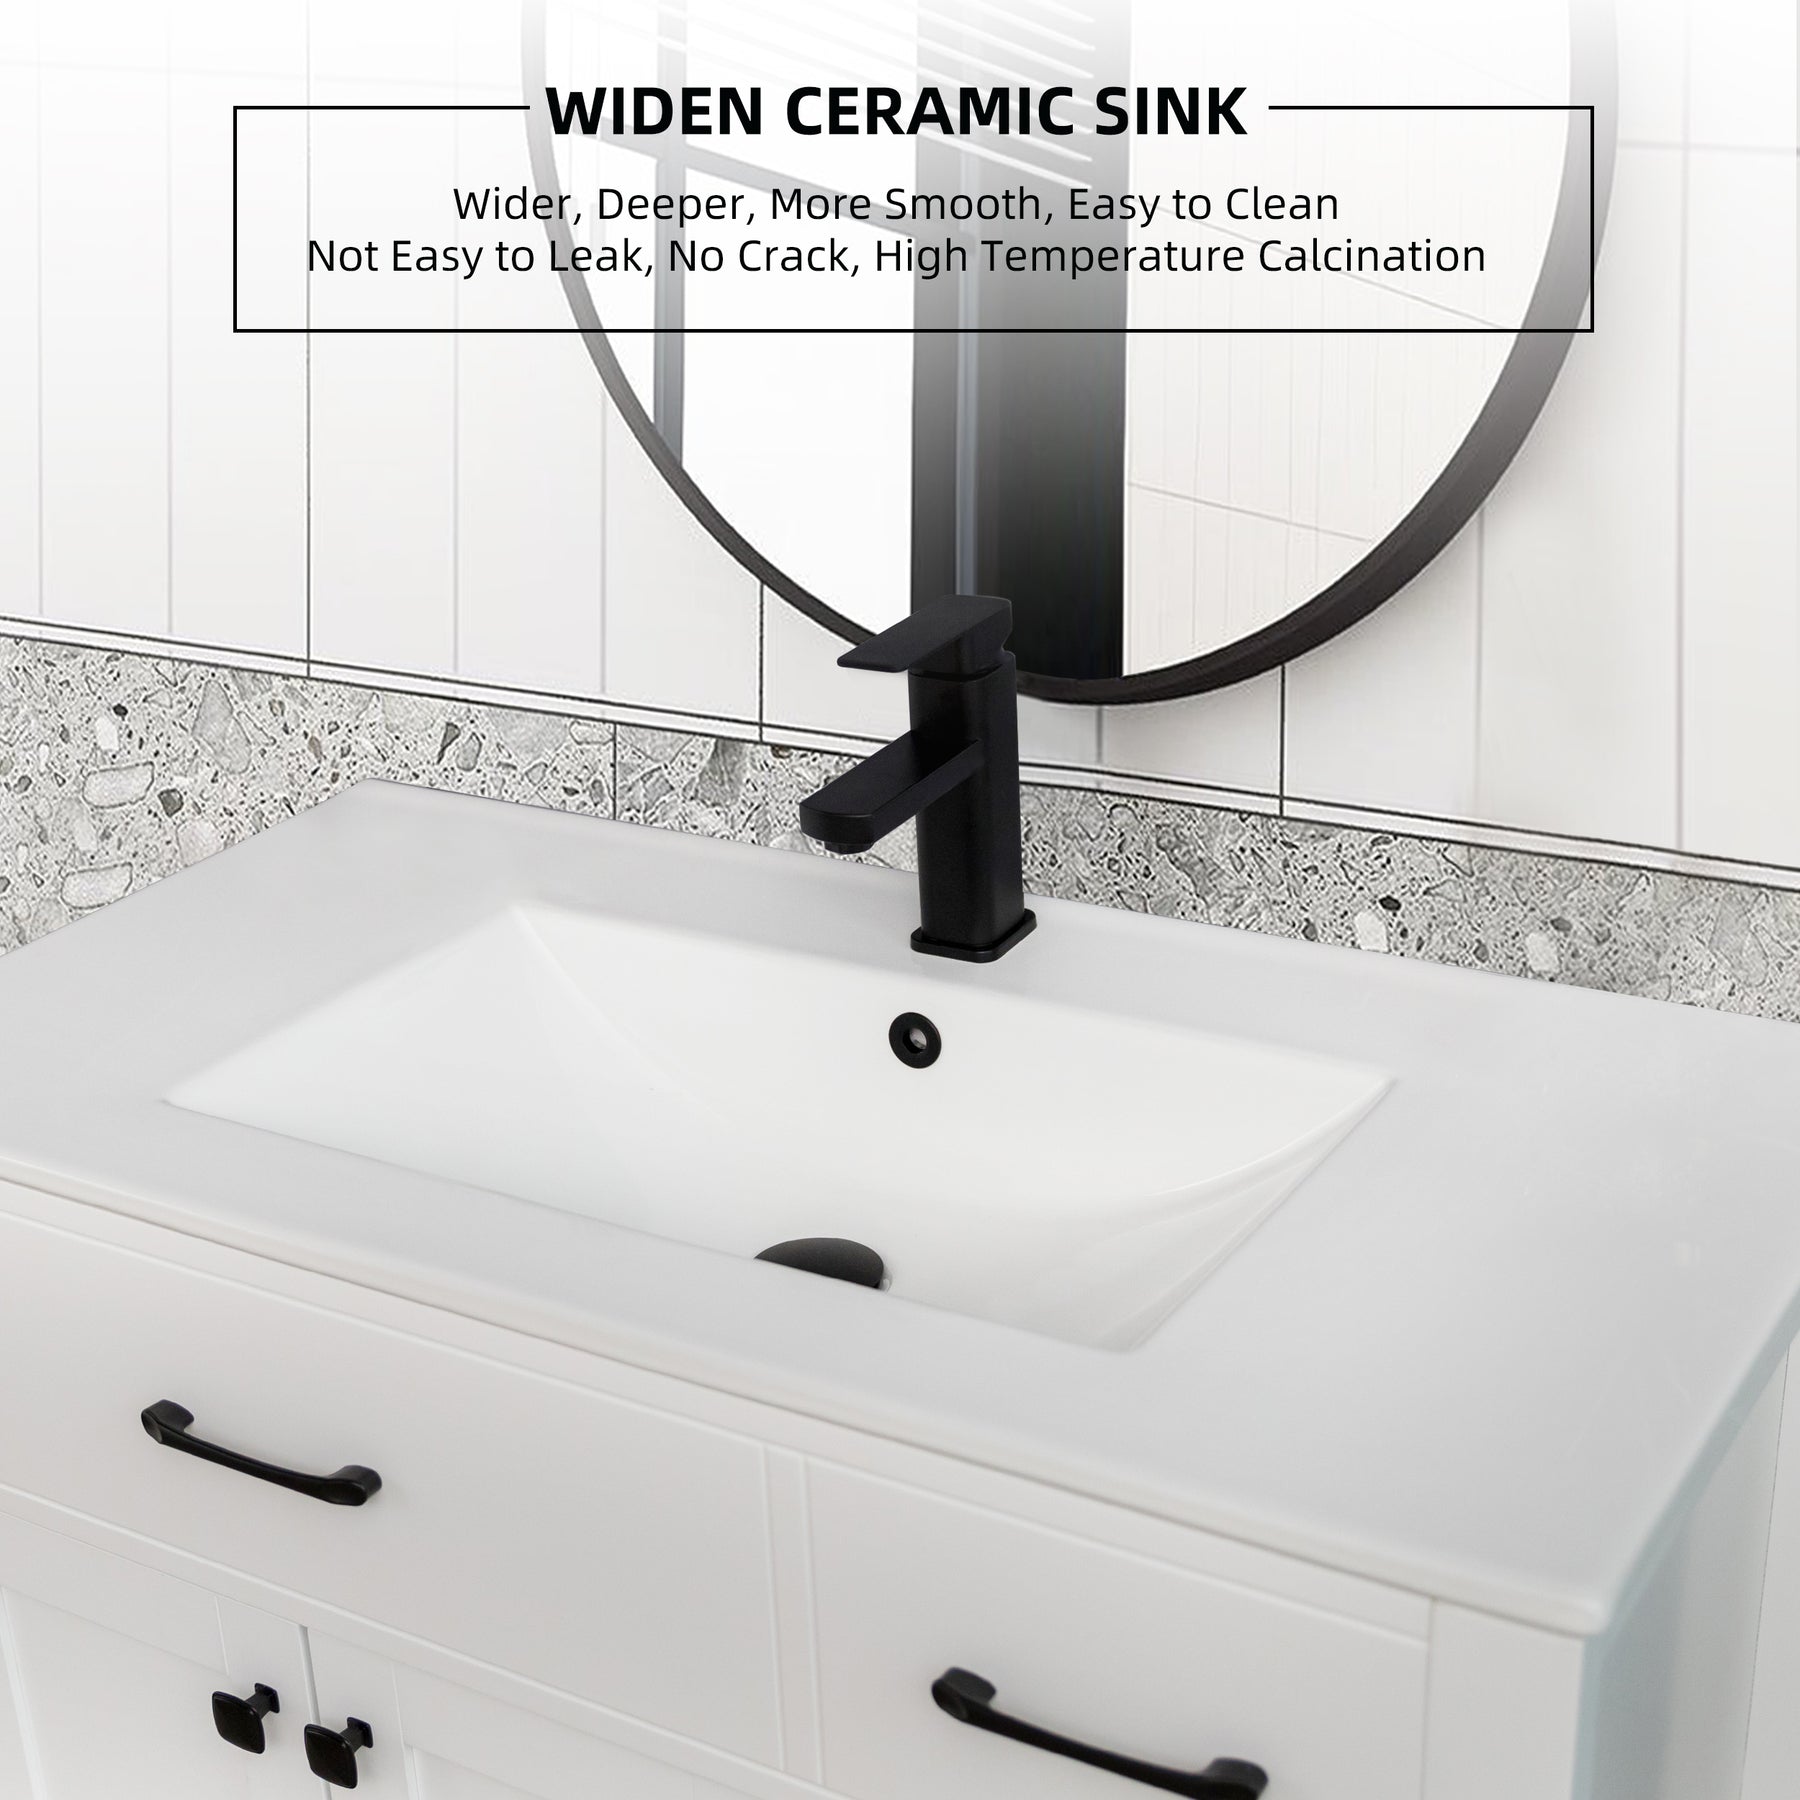 Eclife 30" Bathroom Vanity Cabinet with Undermount Vessel Sink Combo